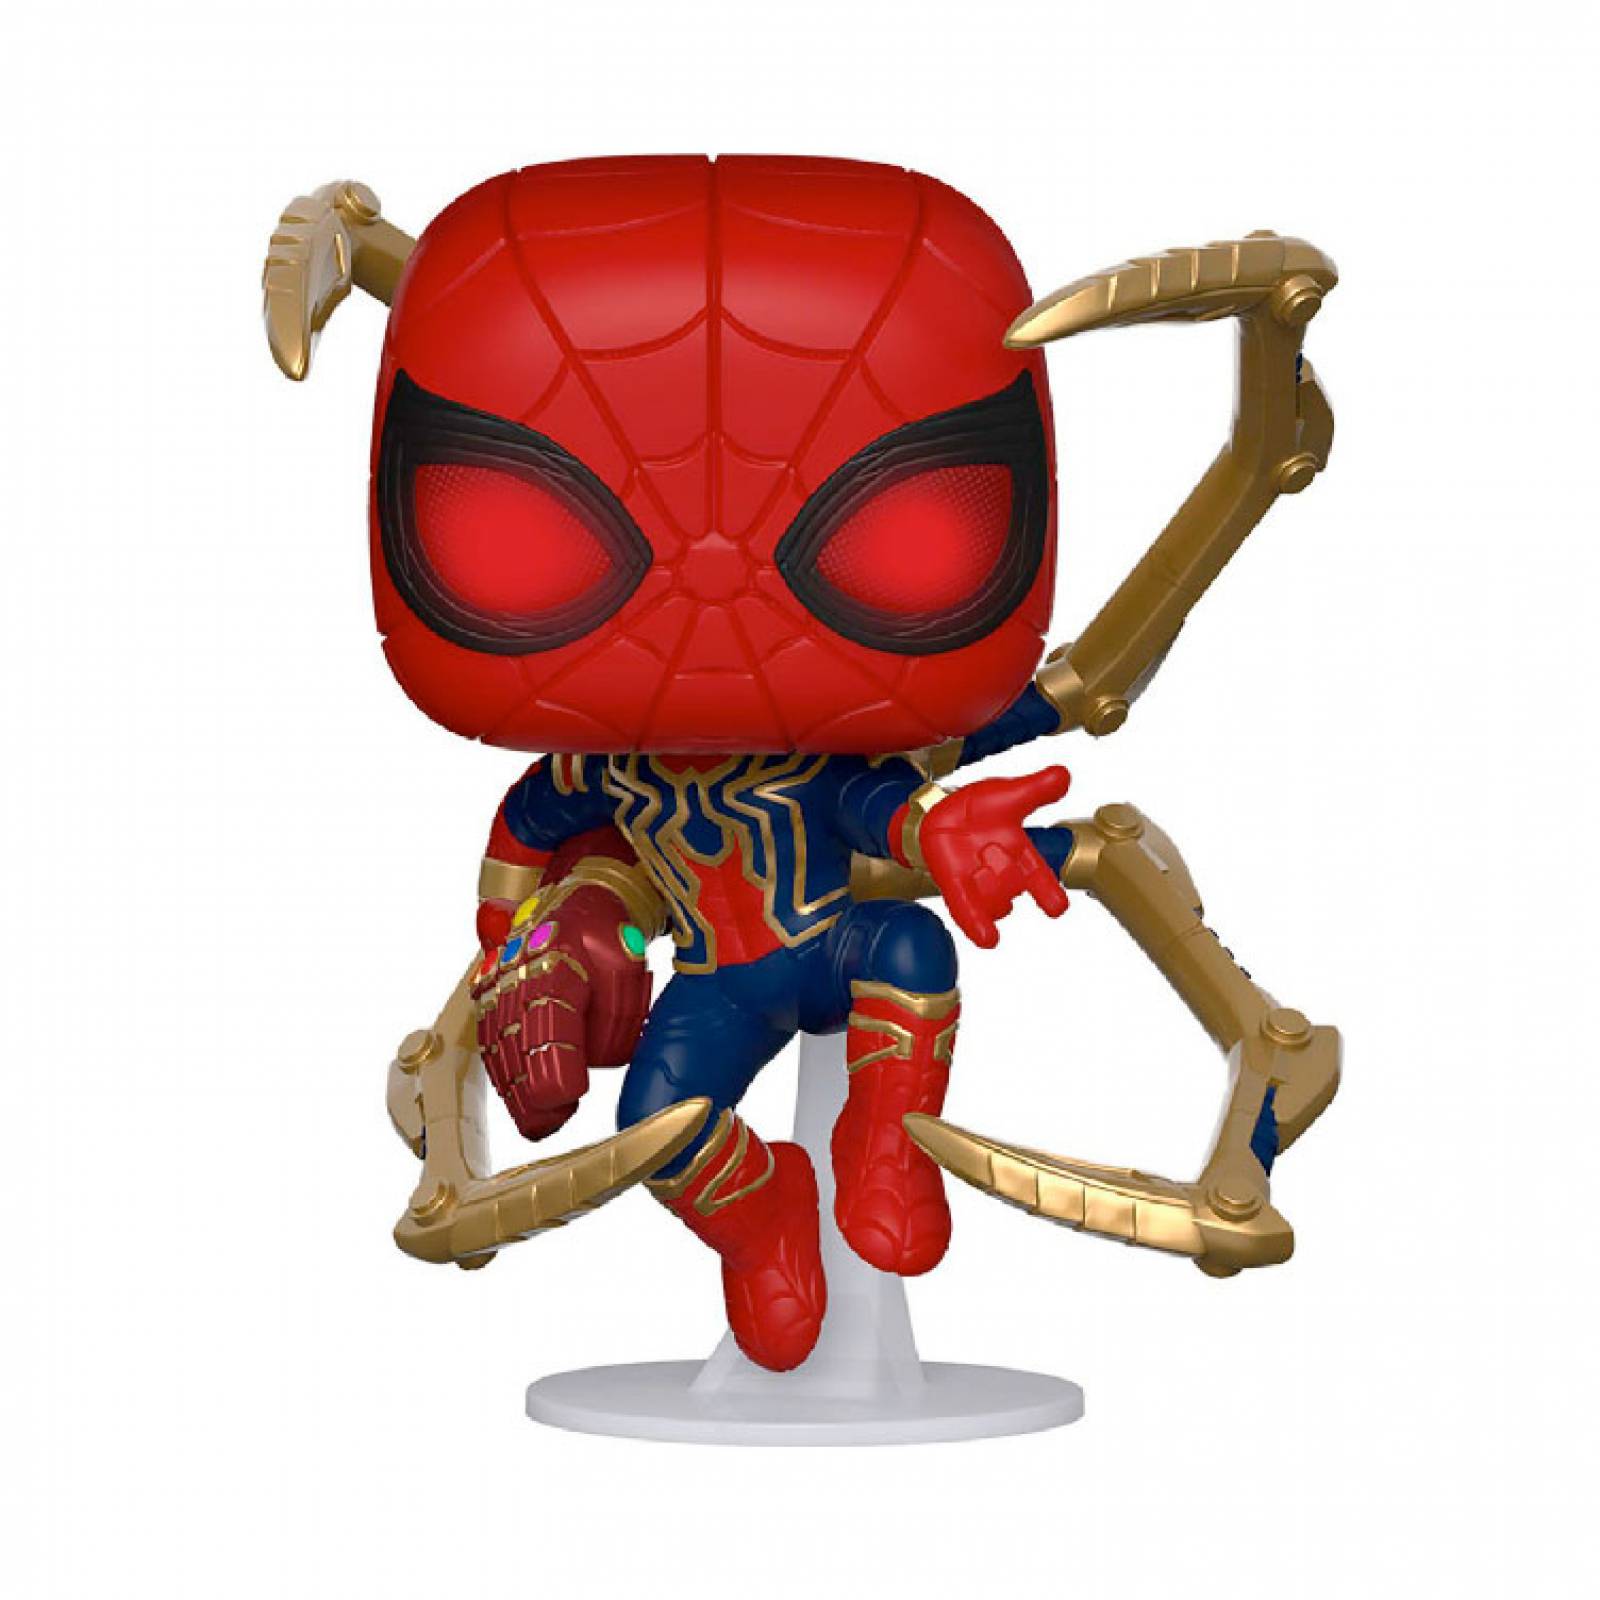 Funko Pop Iron Spider with Gauntlet Marvel Avengers Endgame